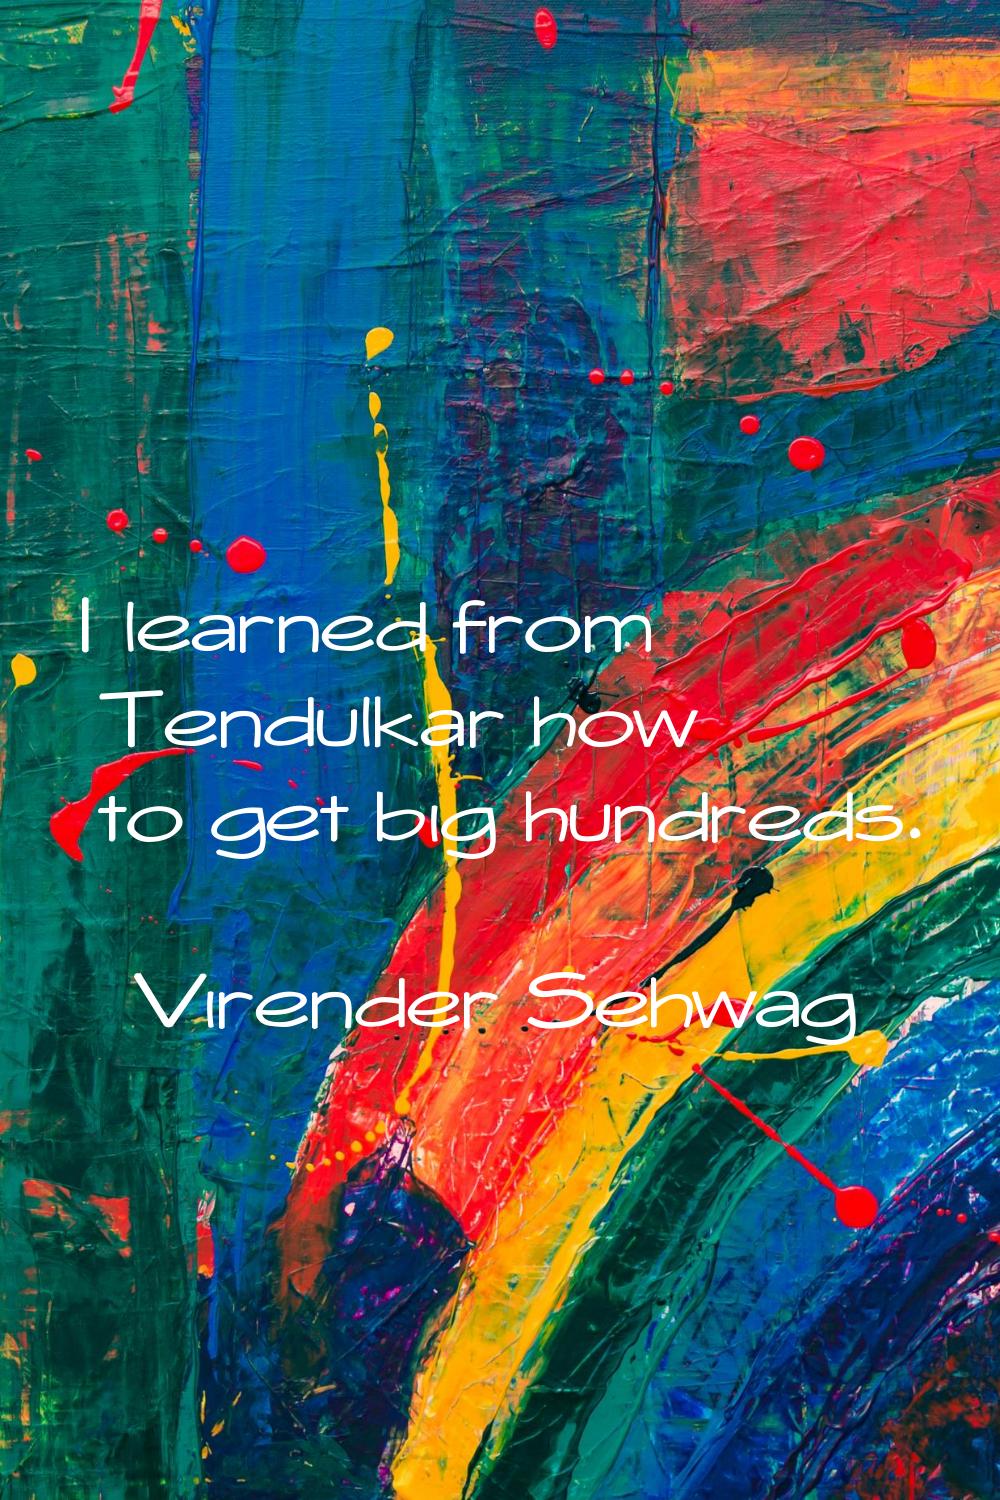 I learned from Tendulkar how to get big hundreds.